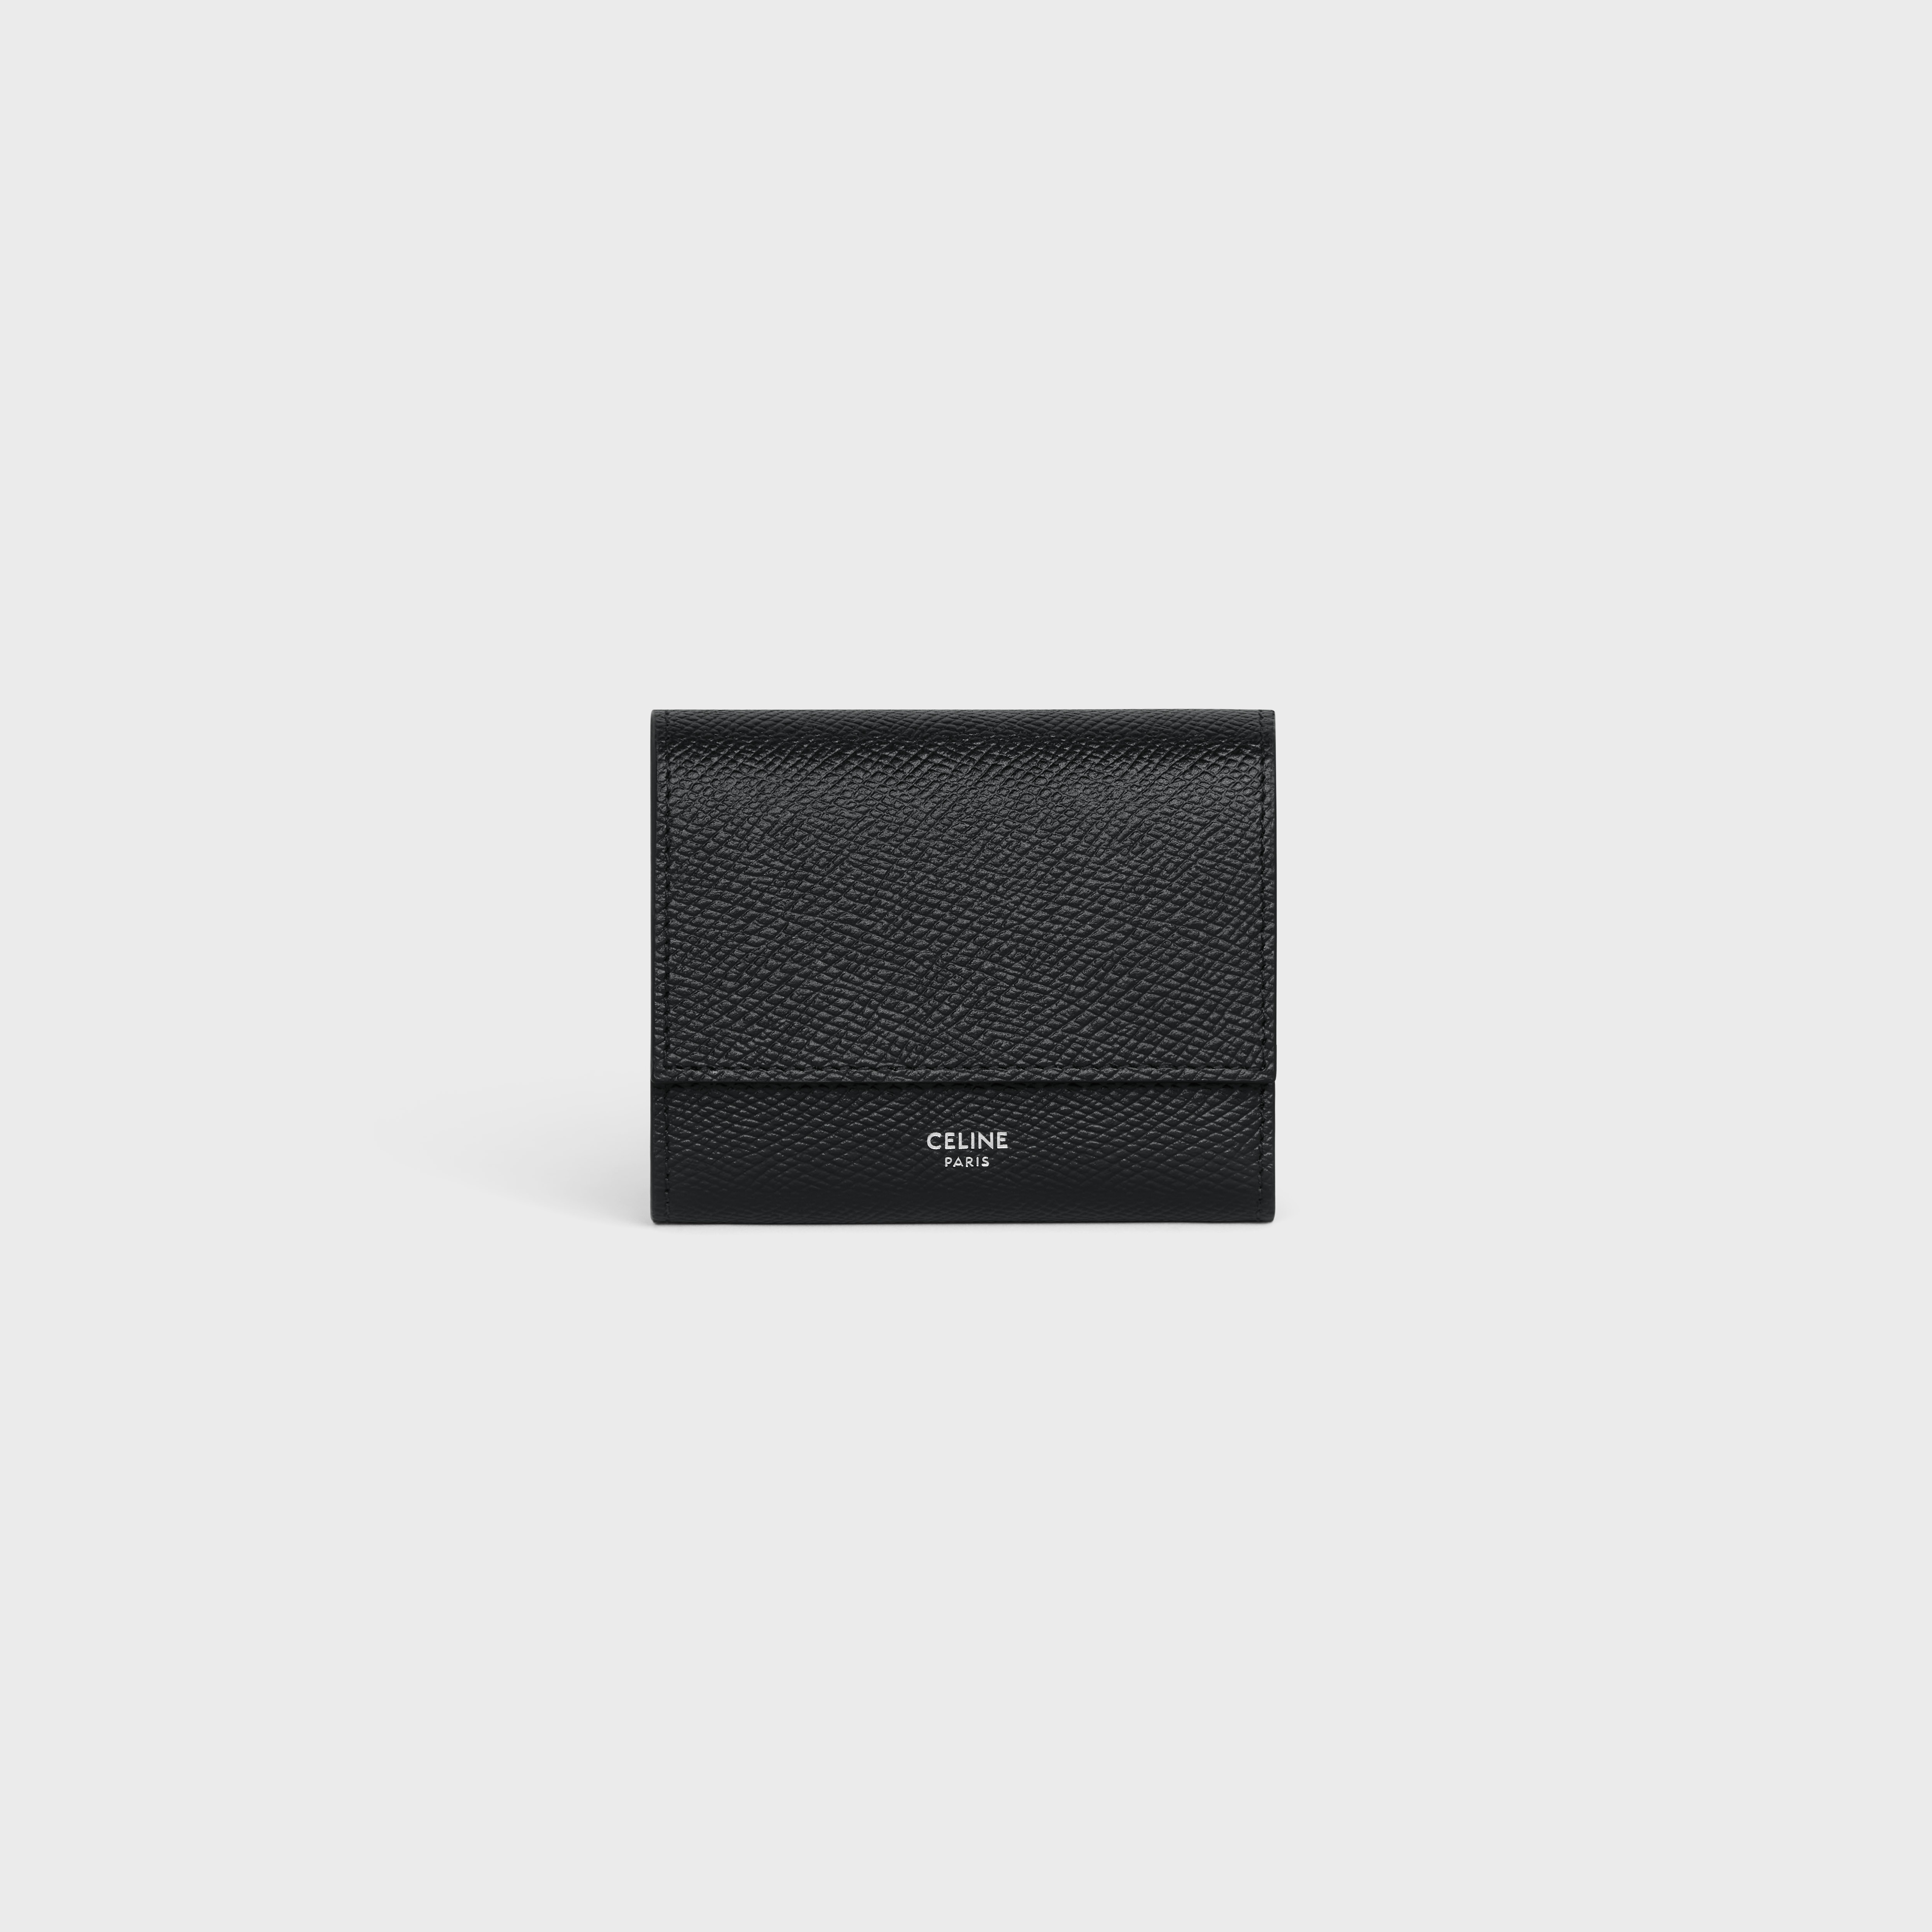 Celine - Folded Compact Wallet in Grained Calfskin Black for Men - 24S